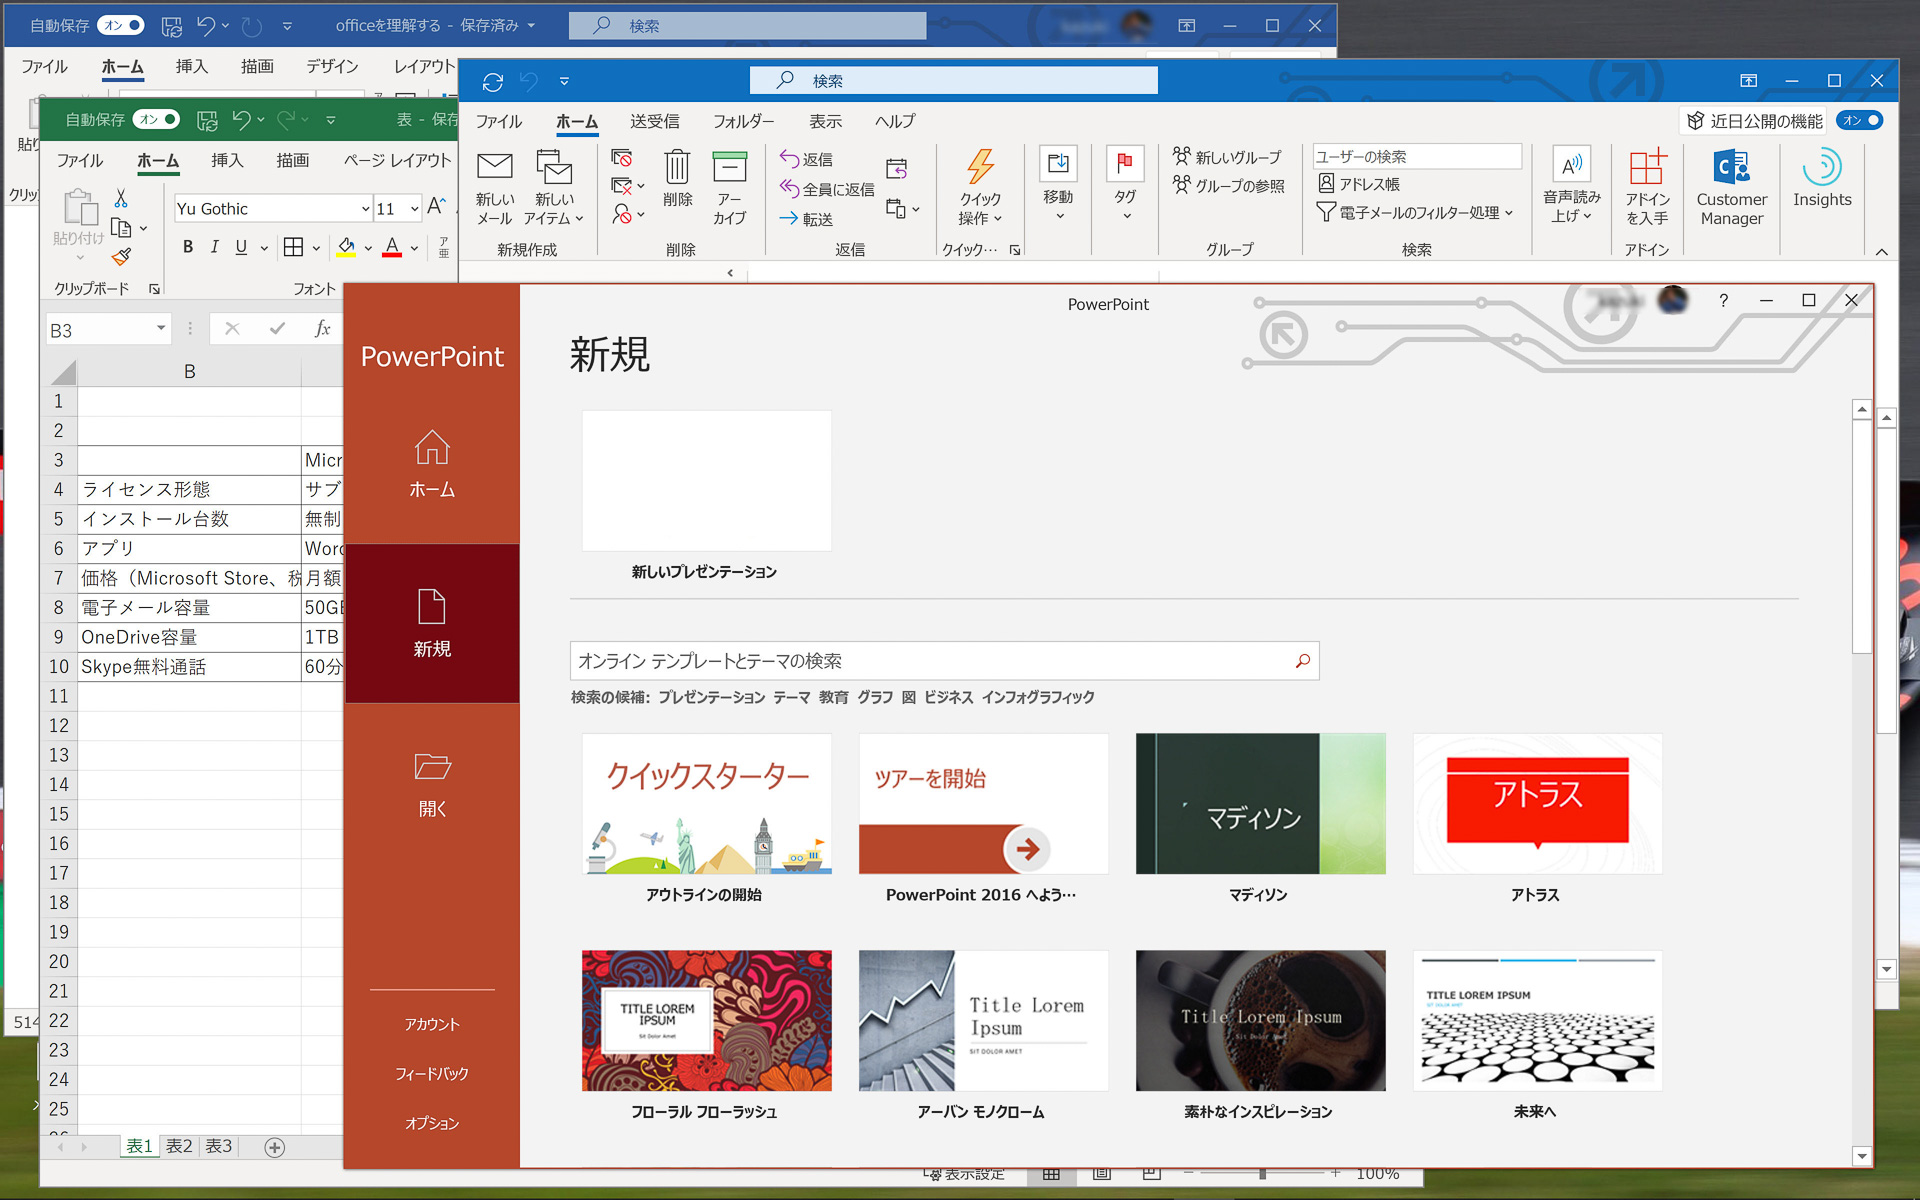 ❮新品未開封❯Microsoft  Office Personal 2016